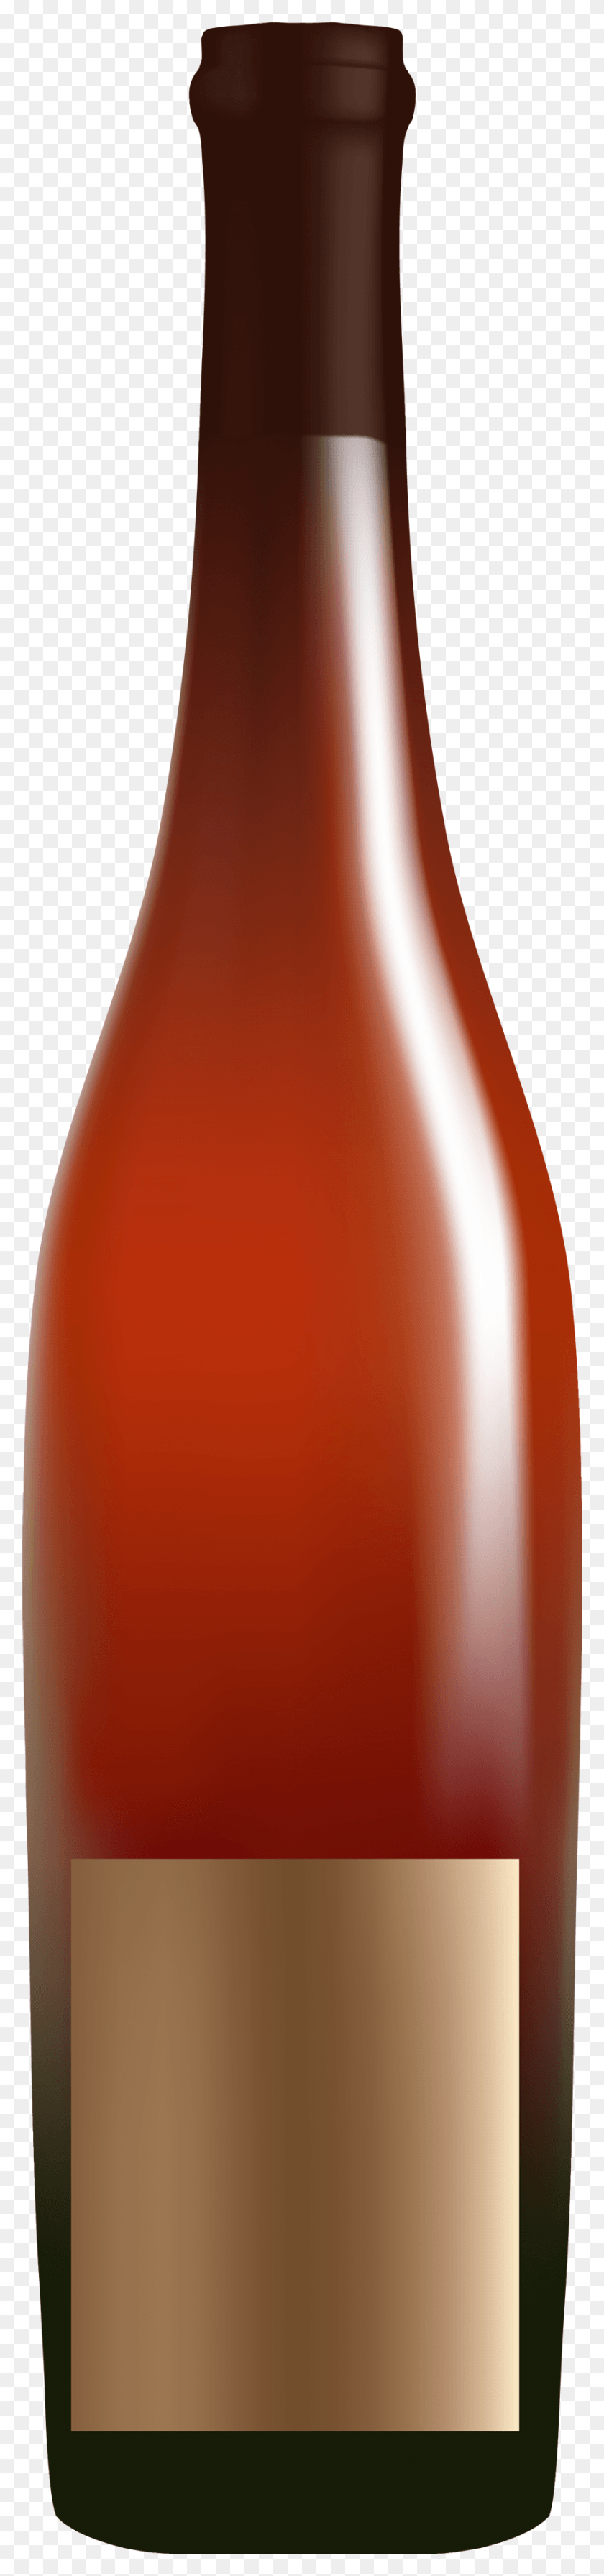 873x3944 Descargar Png Botella De Alcohol Rojo Png El Alcohol En Una Botella Png Gratis Vectores Png Gratis